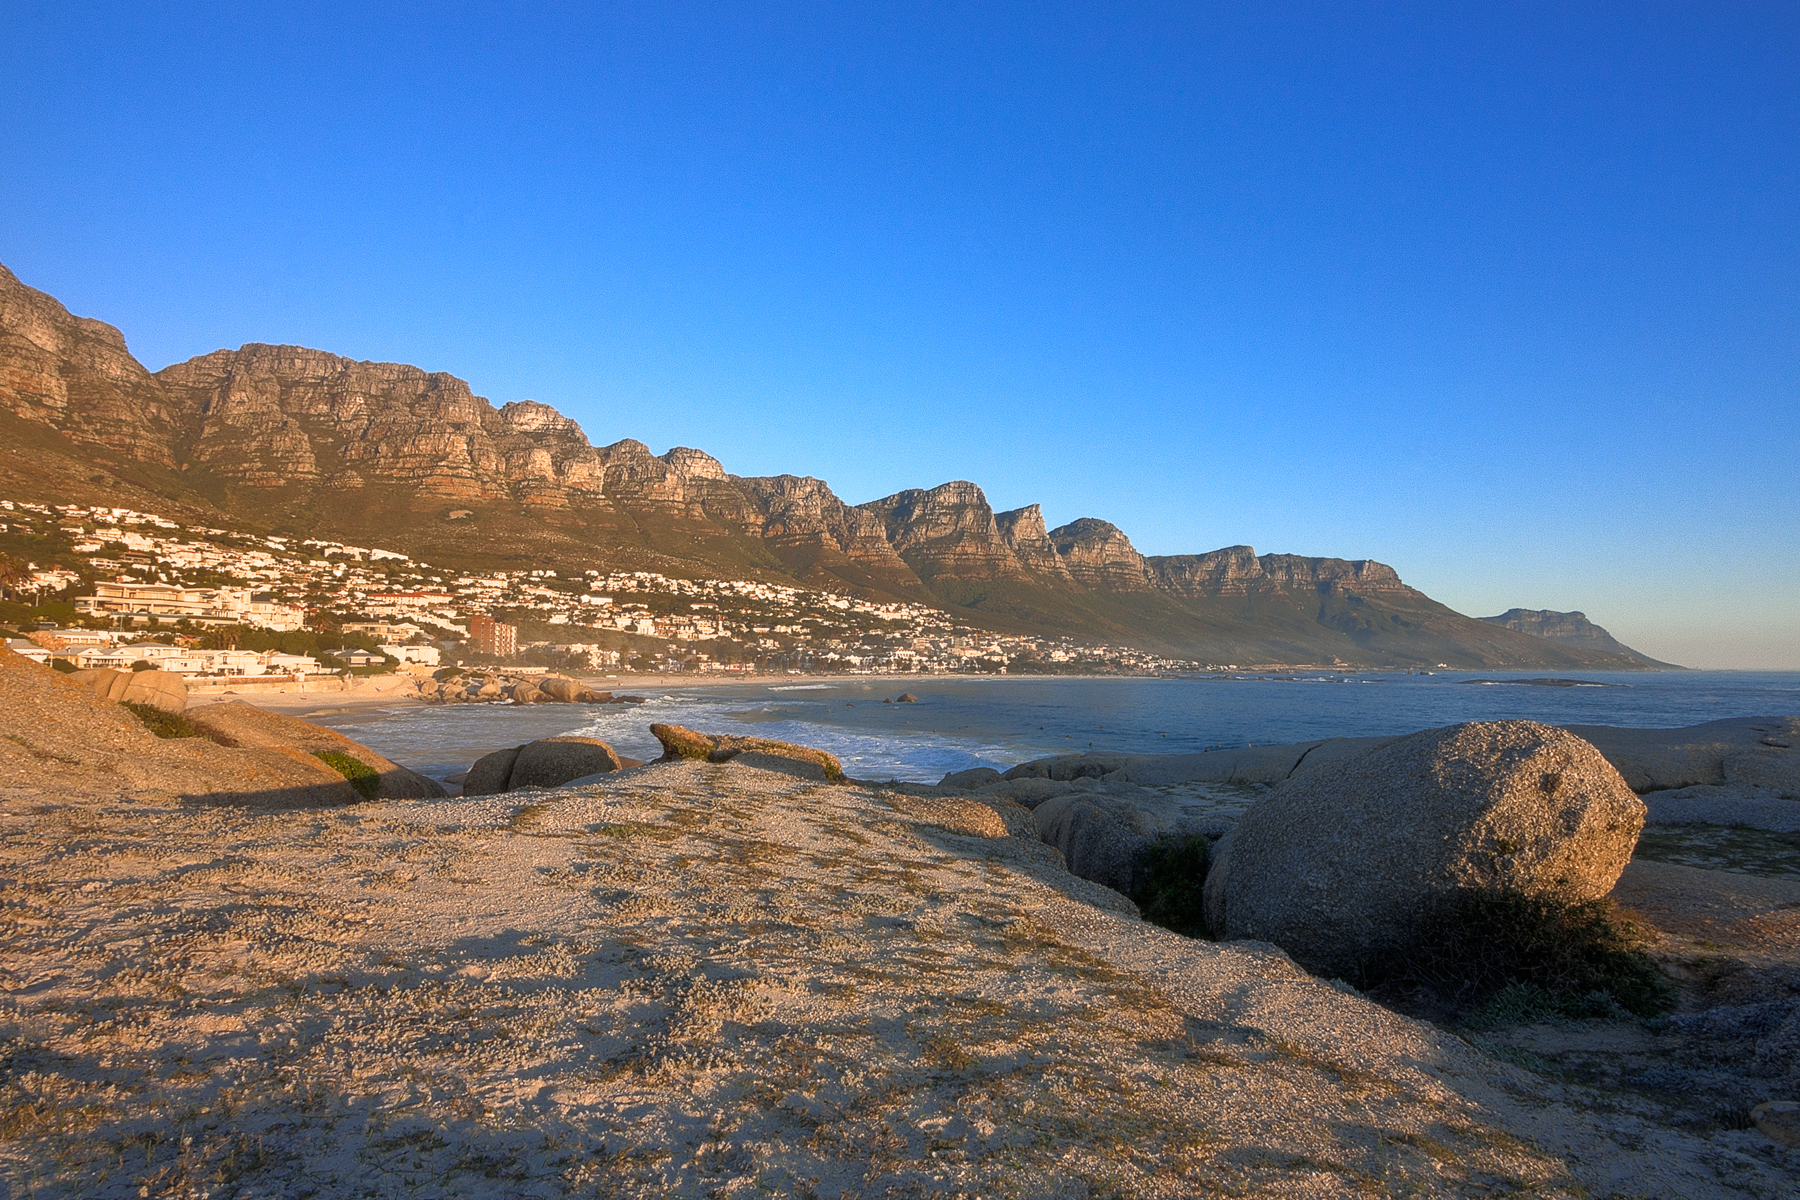 Cape town coastal scenery - hdr photo